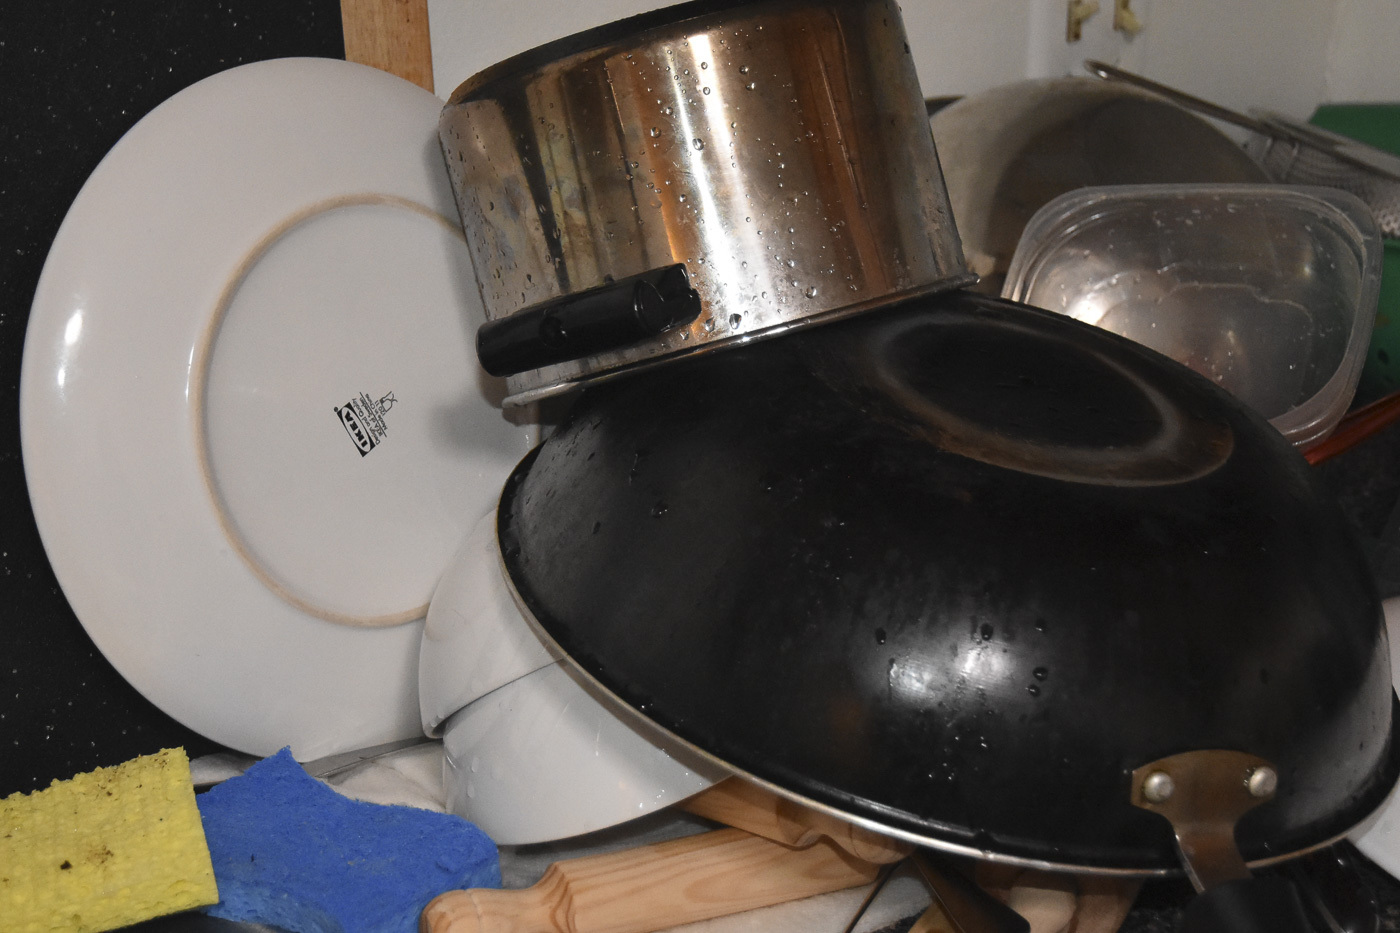 a pile of pots, pans, plates, and a wok